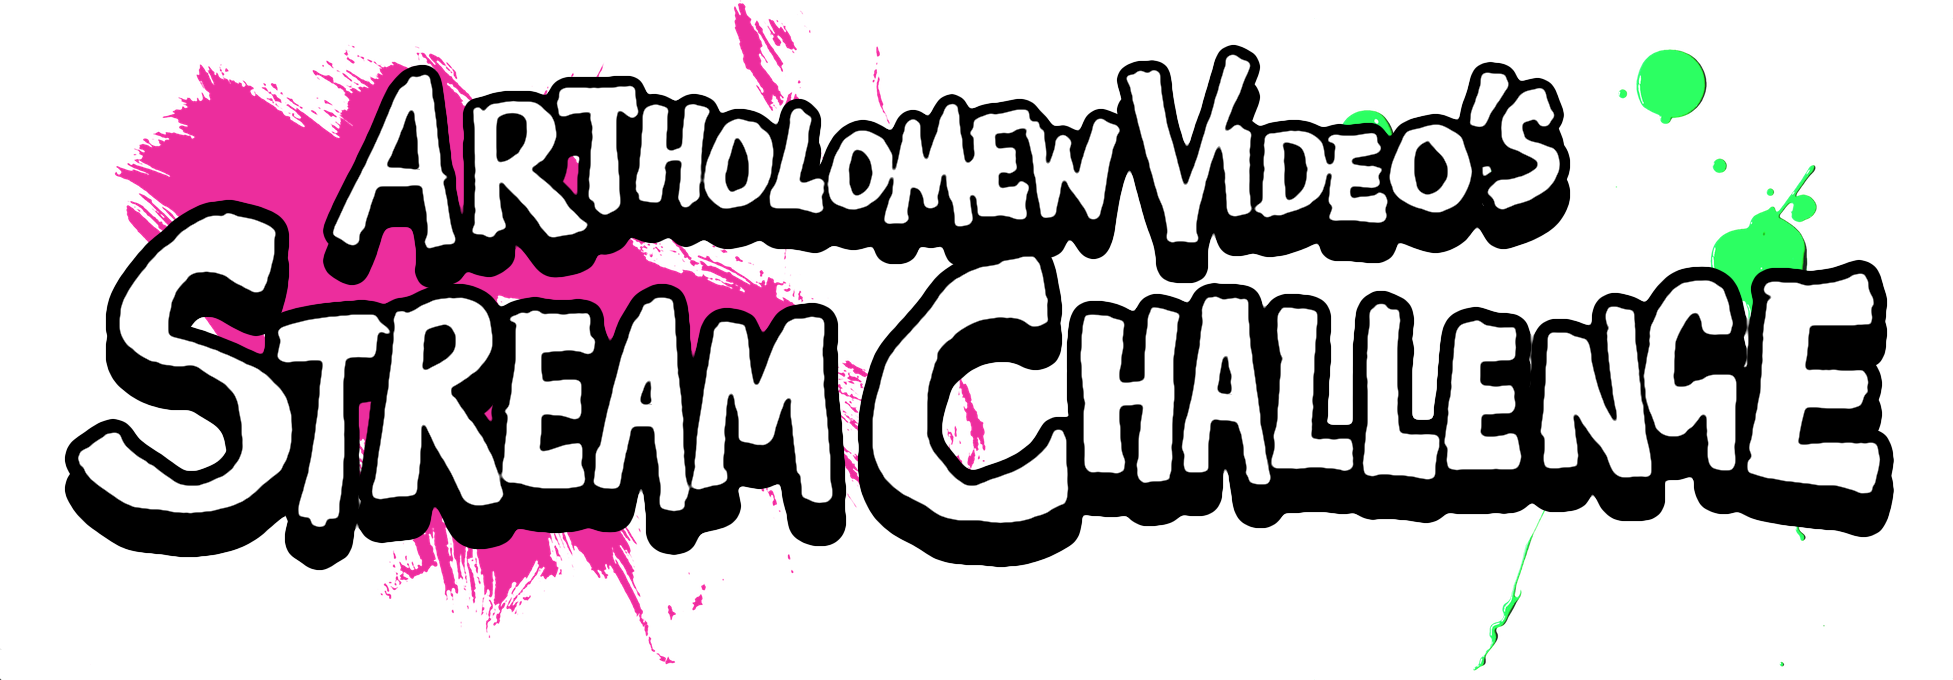 Artholomew Video's Stream Challenge